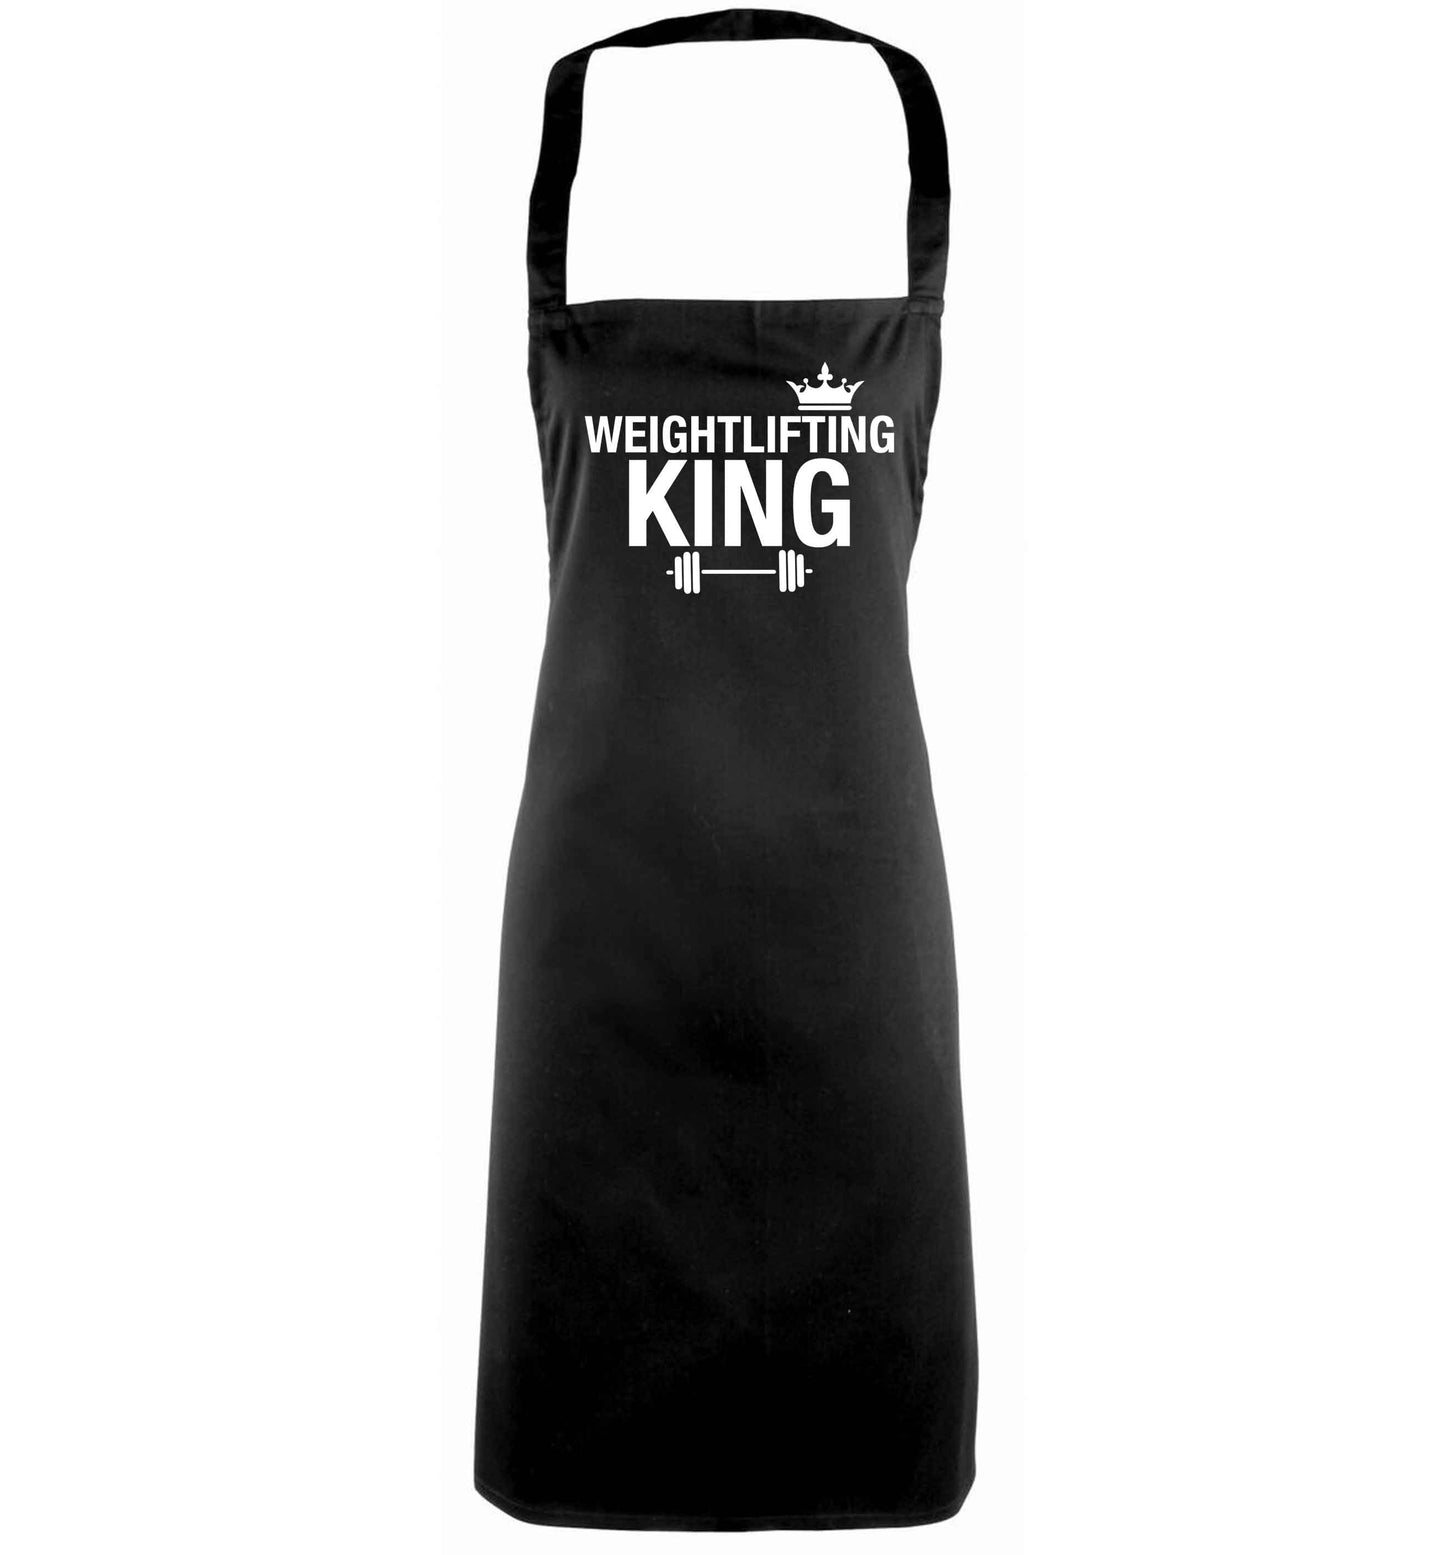 Weightlifting king black apron